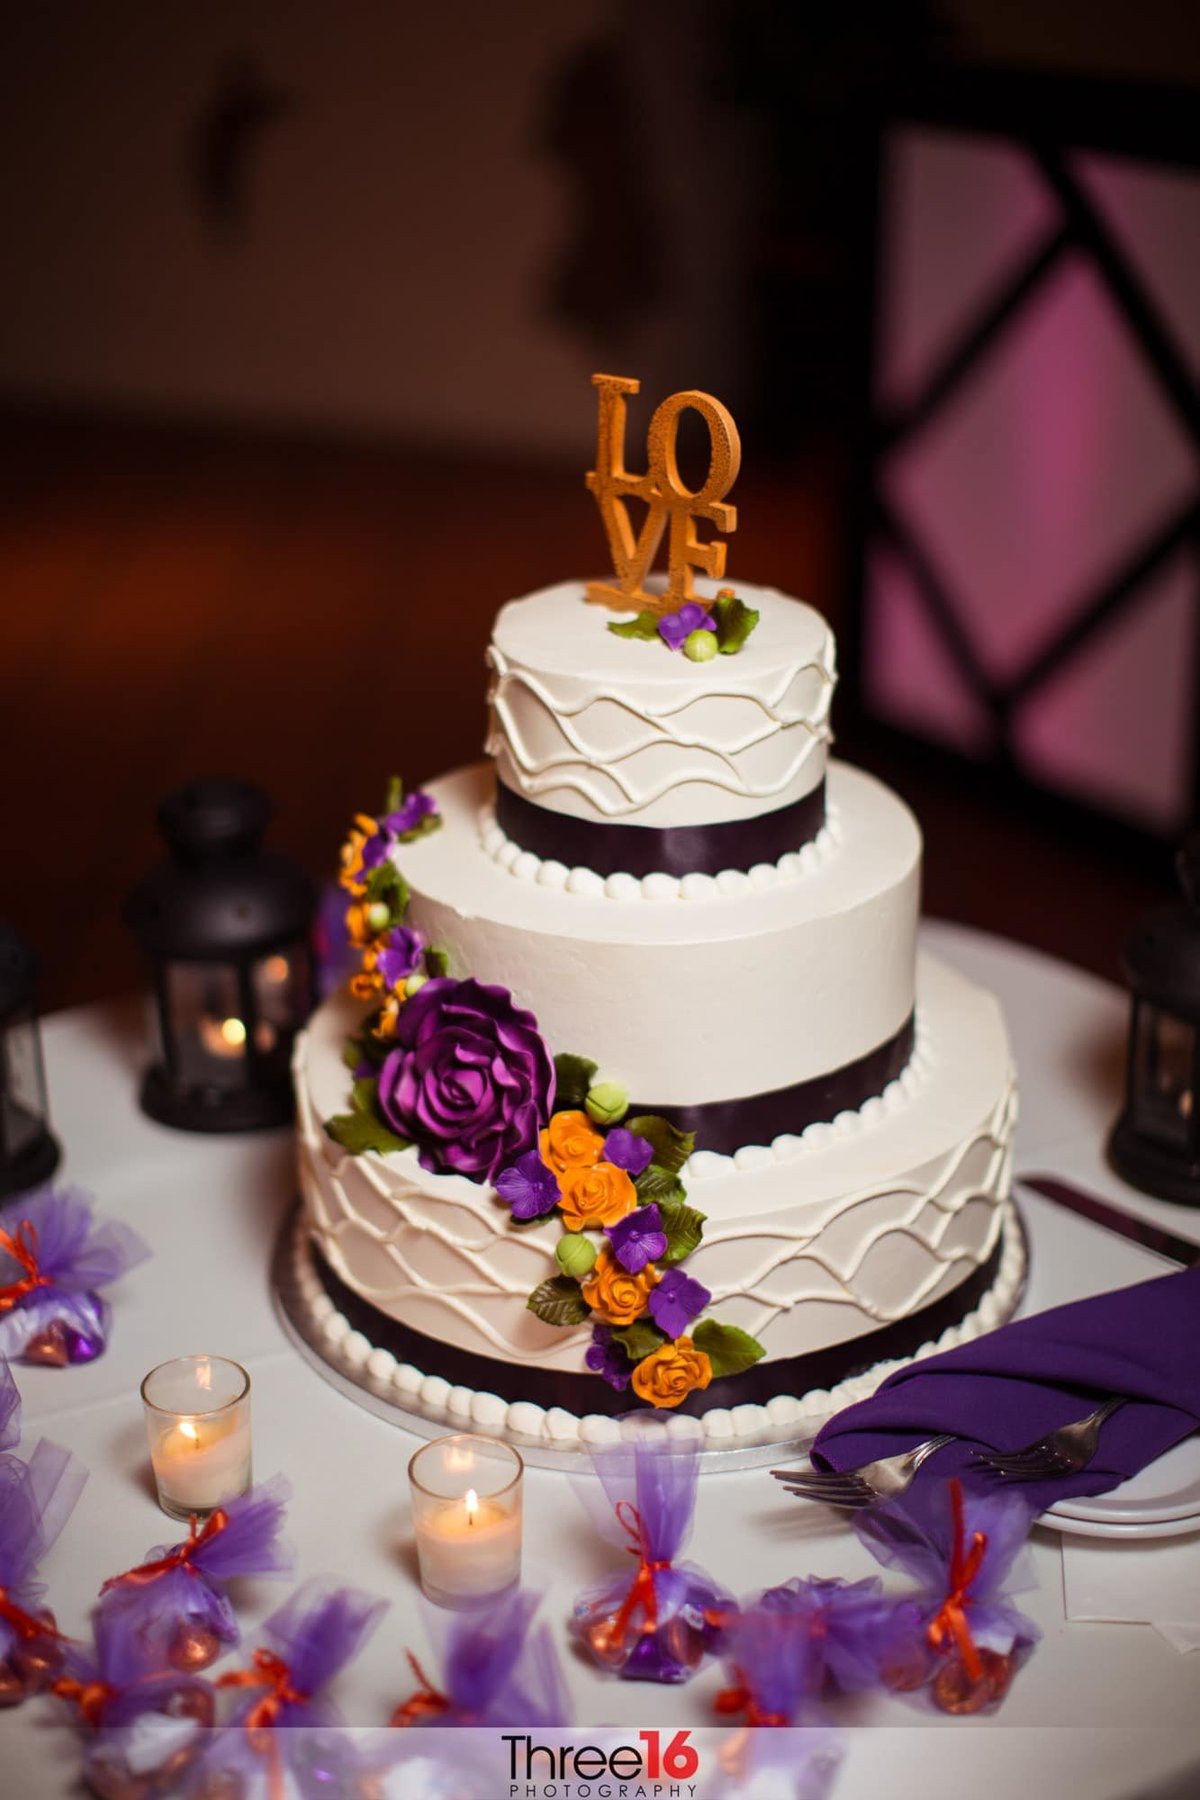 Beautiful white 3-tiered wedding cake